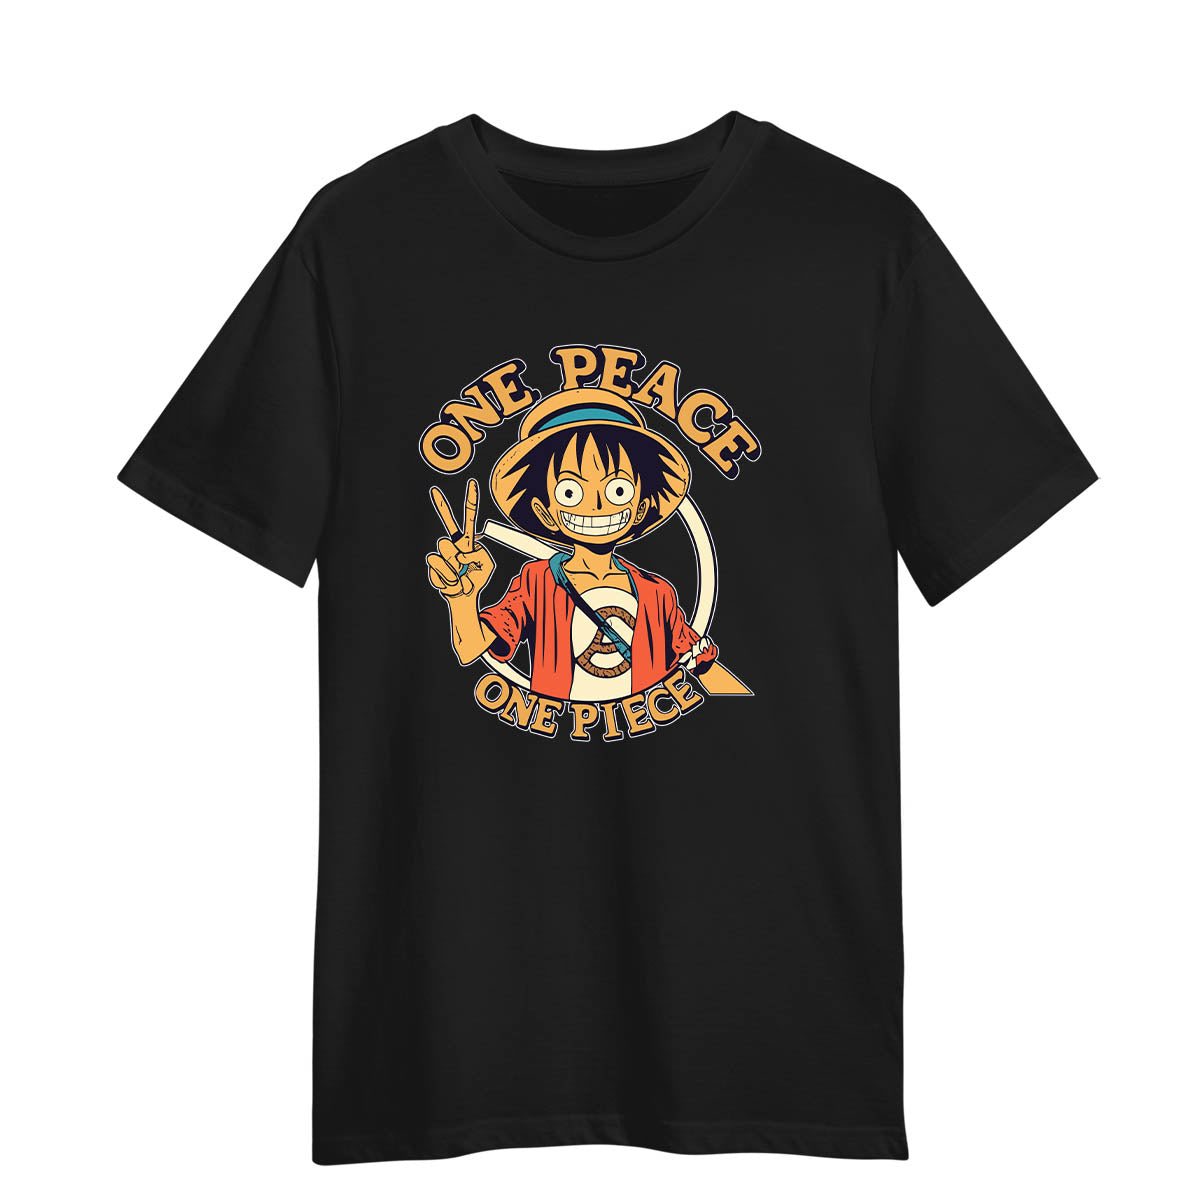 One Peace One Piece Anime Monkey D Luffy One Piece Manga Adult Unisex Black T-shirt